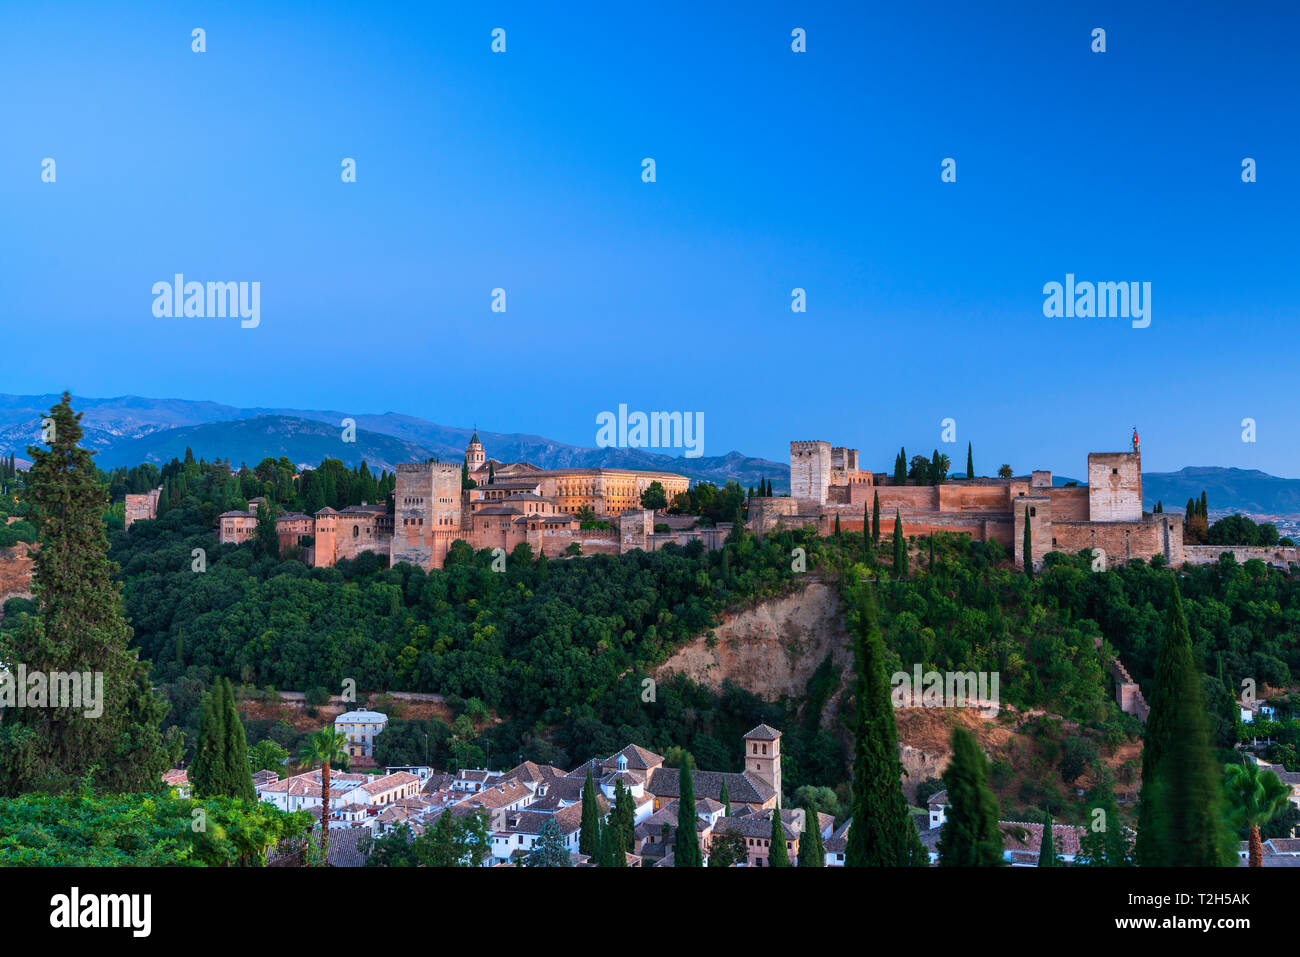 Alhambra palace in Granada, Spain, Europe Stock Photo